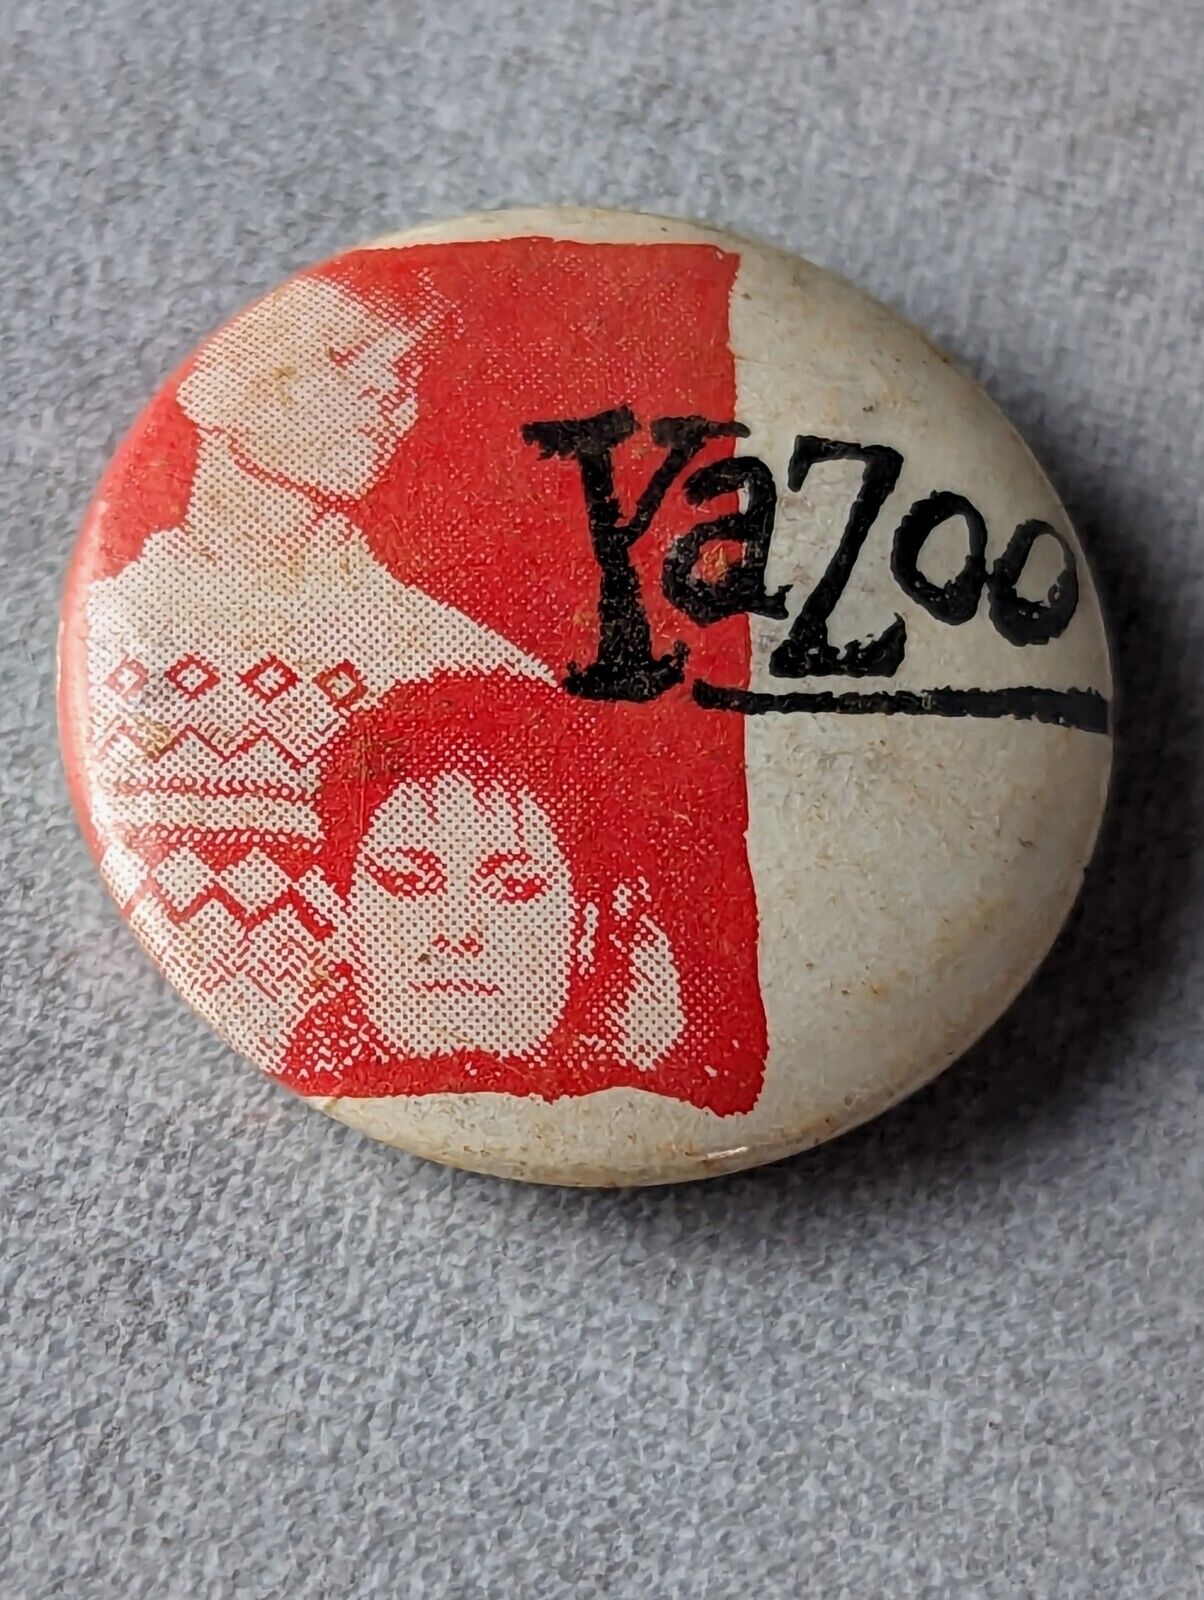 VINTAGE YAZOO PIN BADGE Purchased Around 1986 